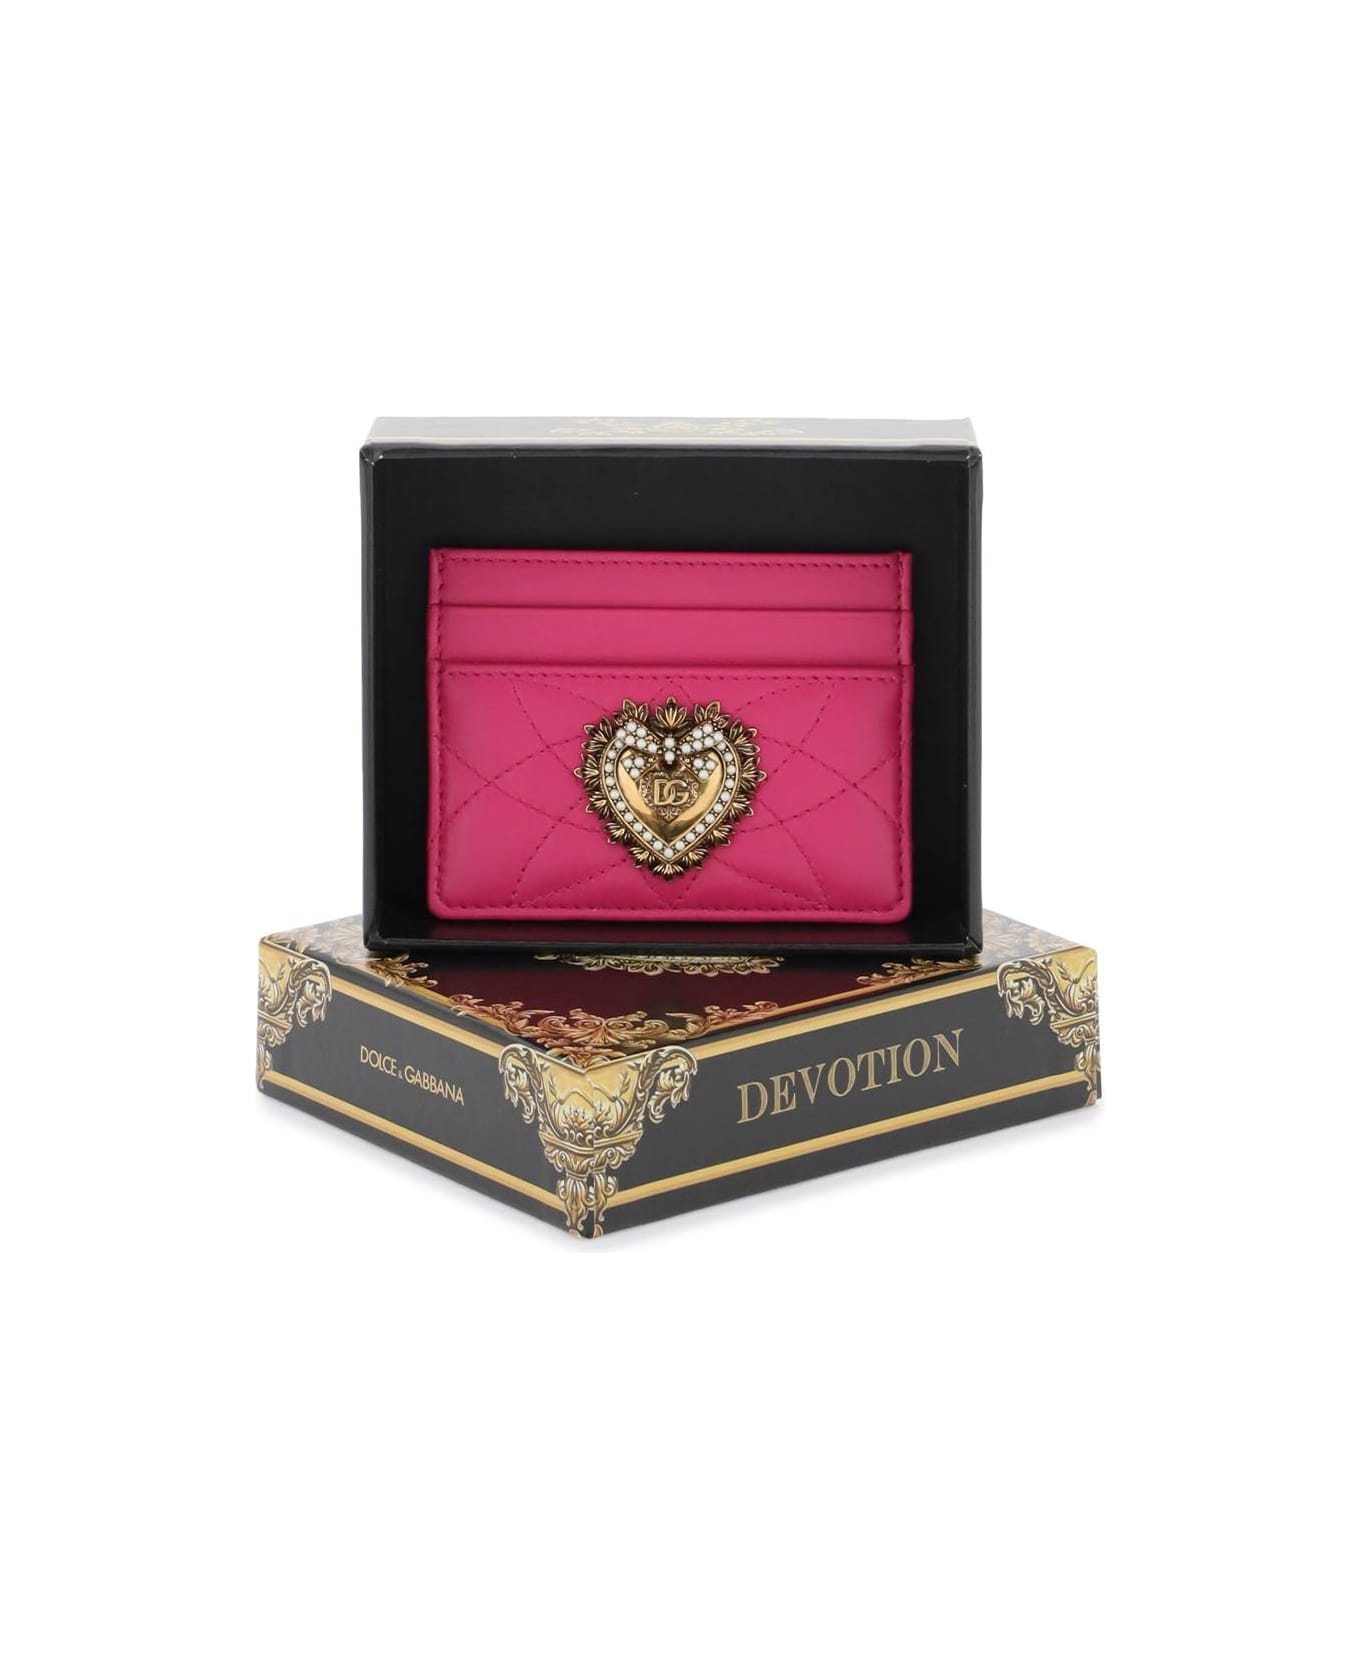 Dolce & Gabbana Devotion Card Holder - Rosa shocking